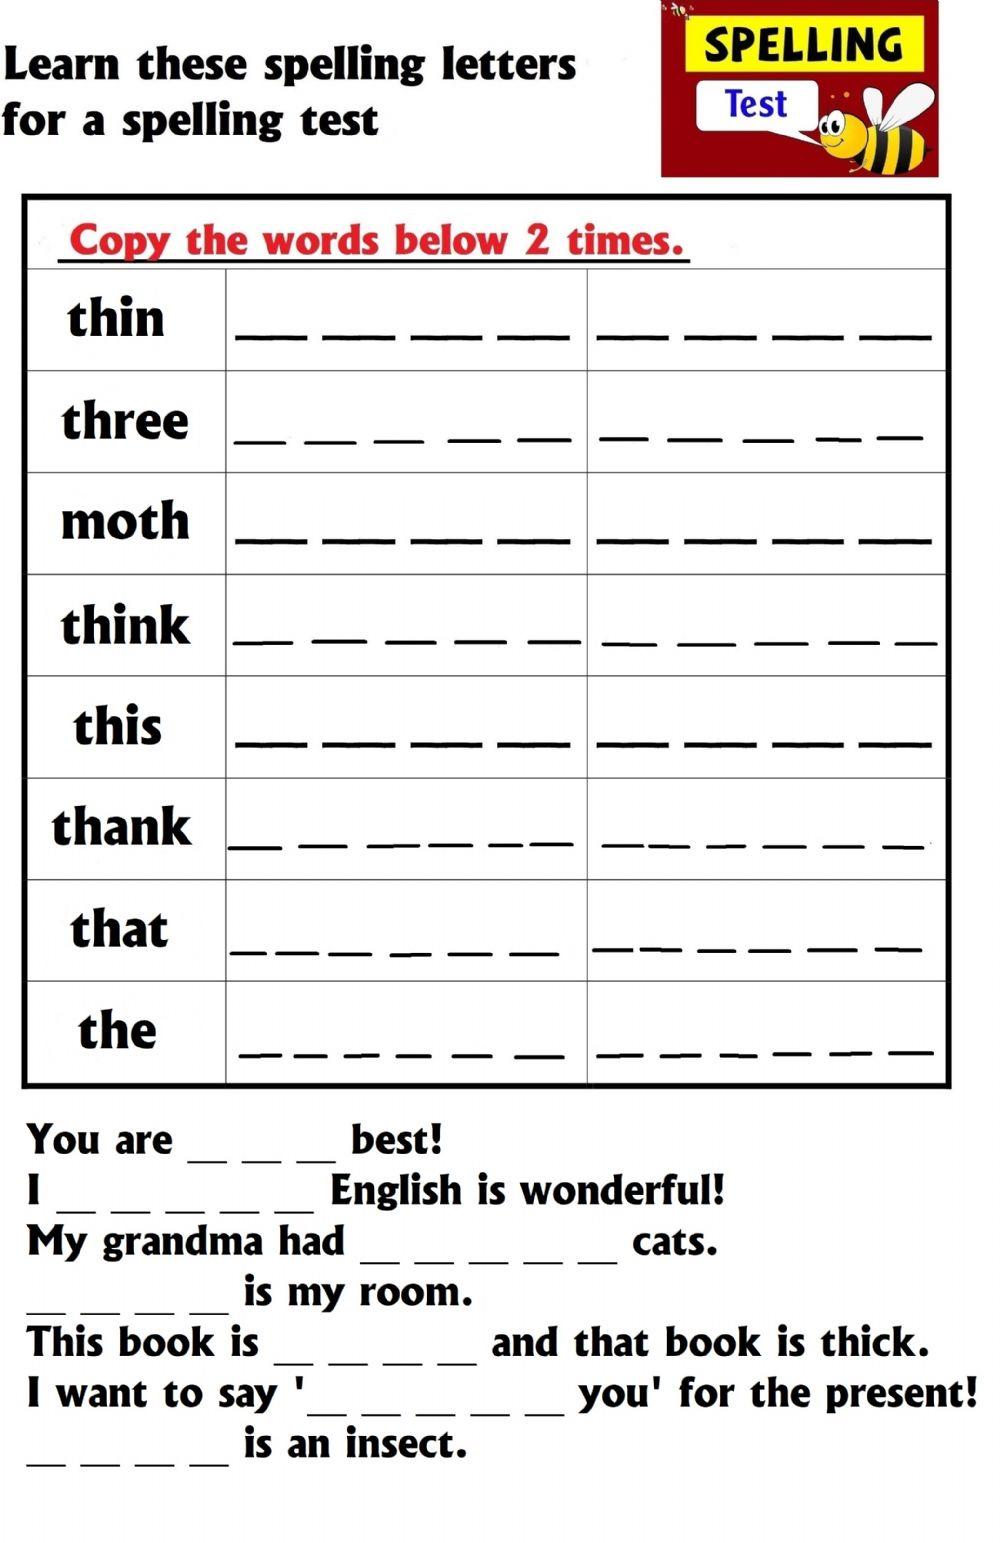 Spelling list 'th'